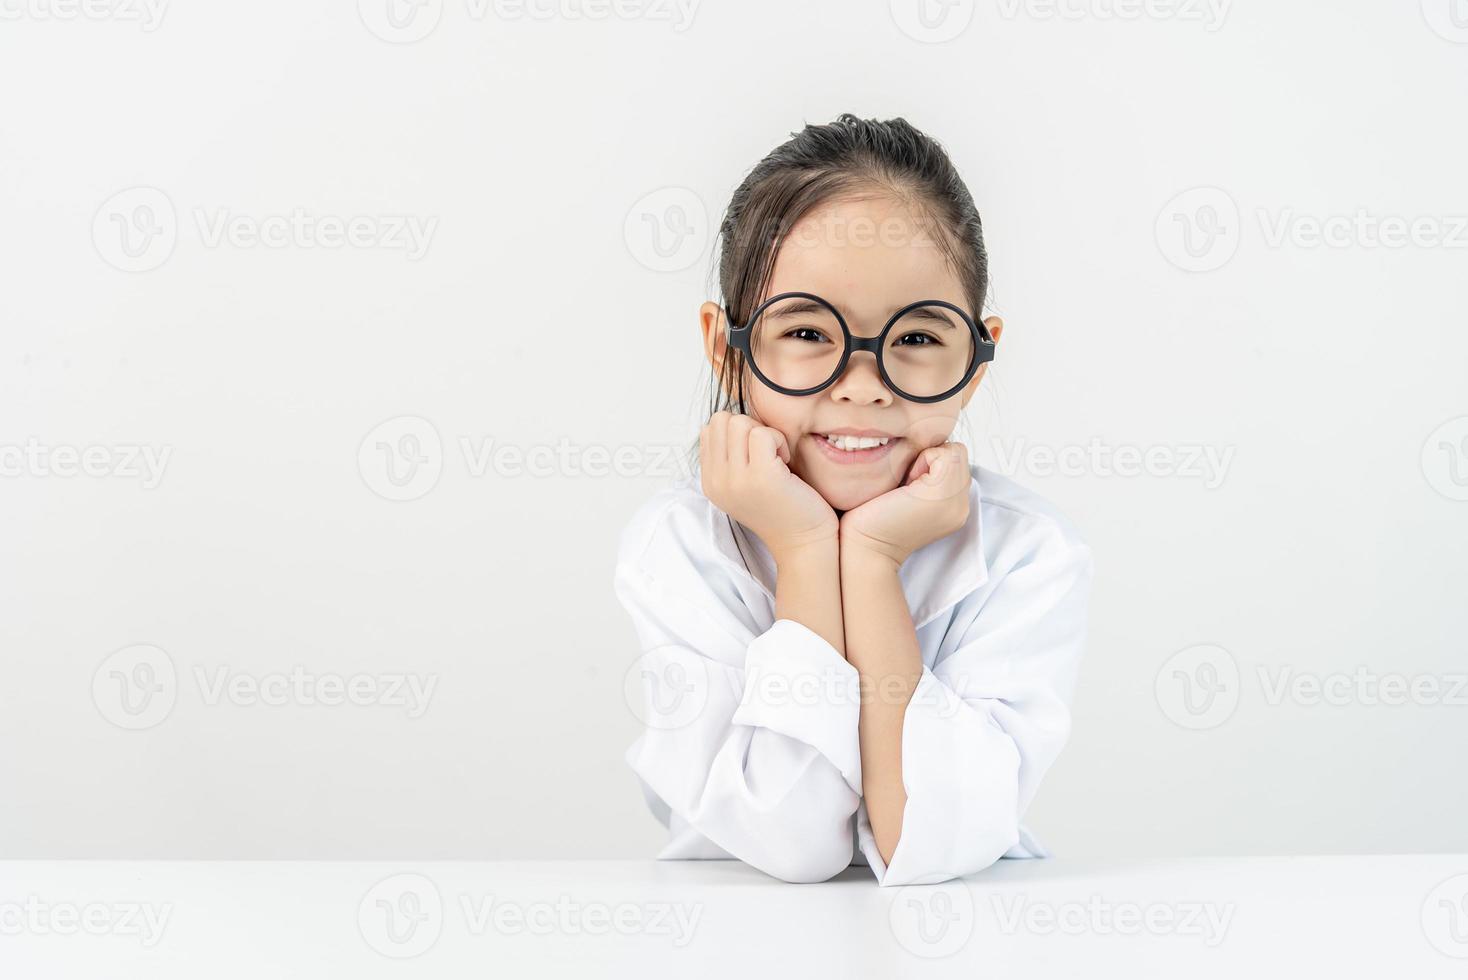 inteligente médico pequeno menina com branco médico casaco foto